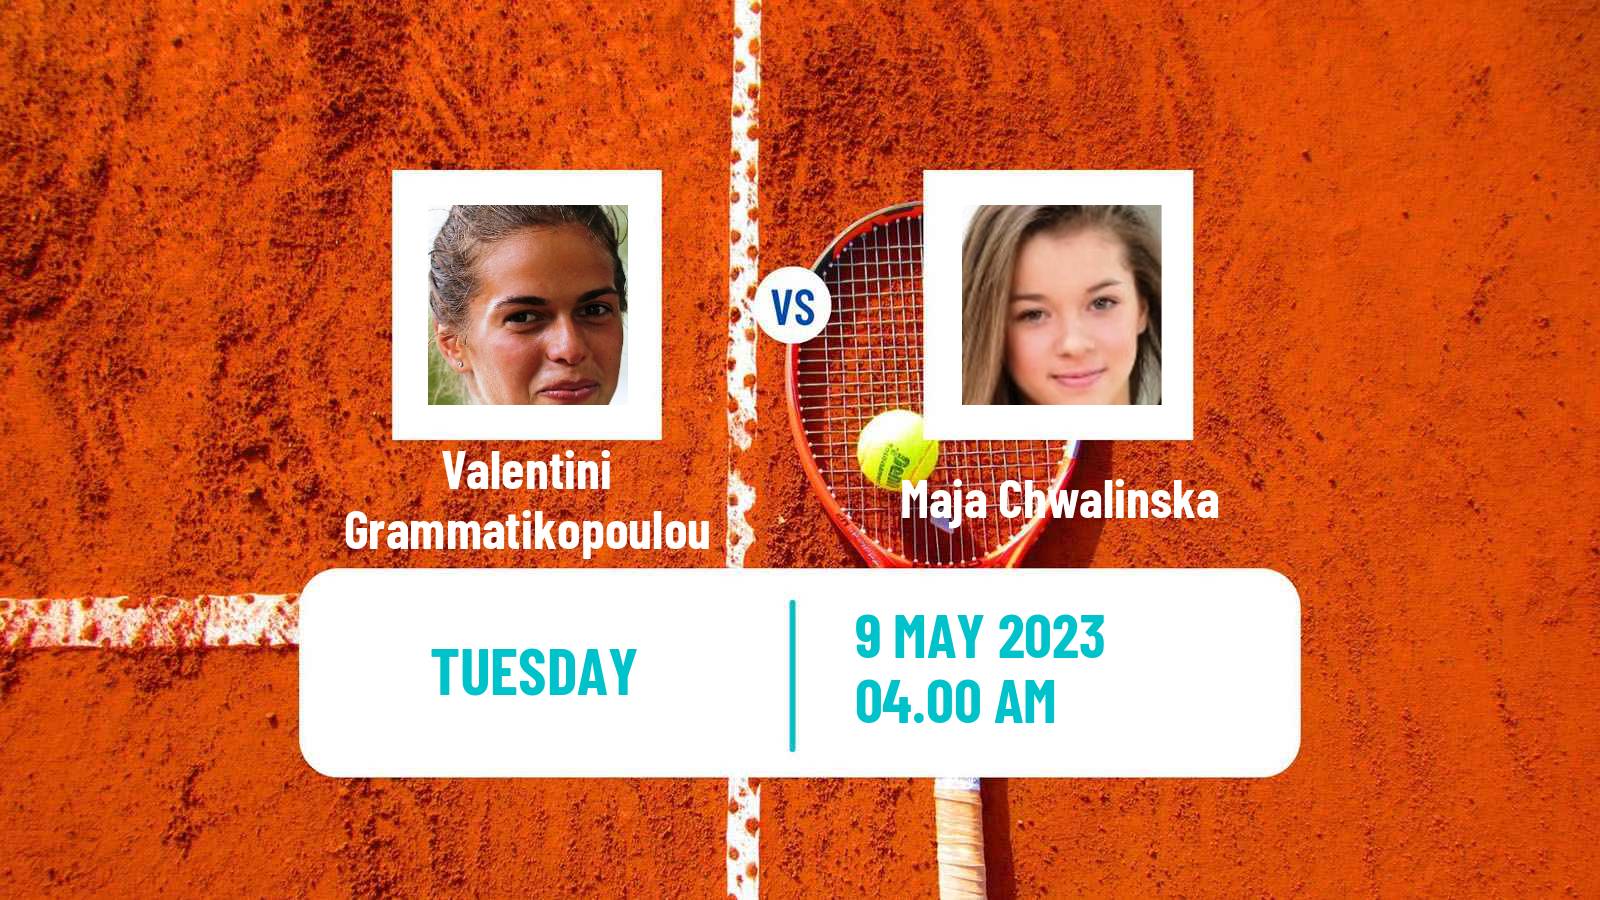 Tennis ITF Tournaments Valentini Grammatikopoulou - Maja Chwalinska